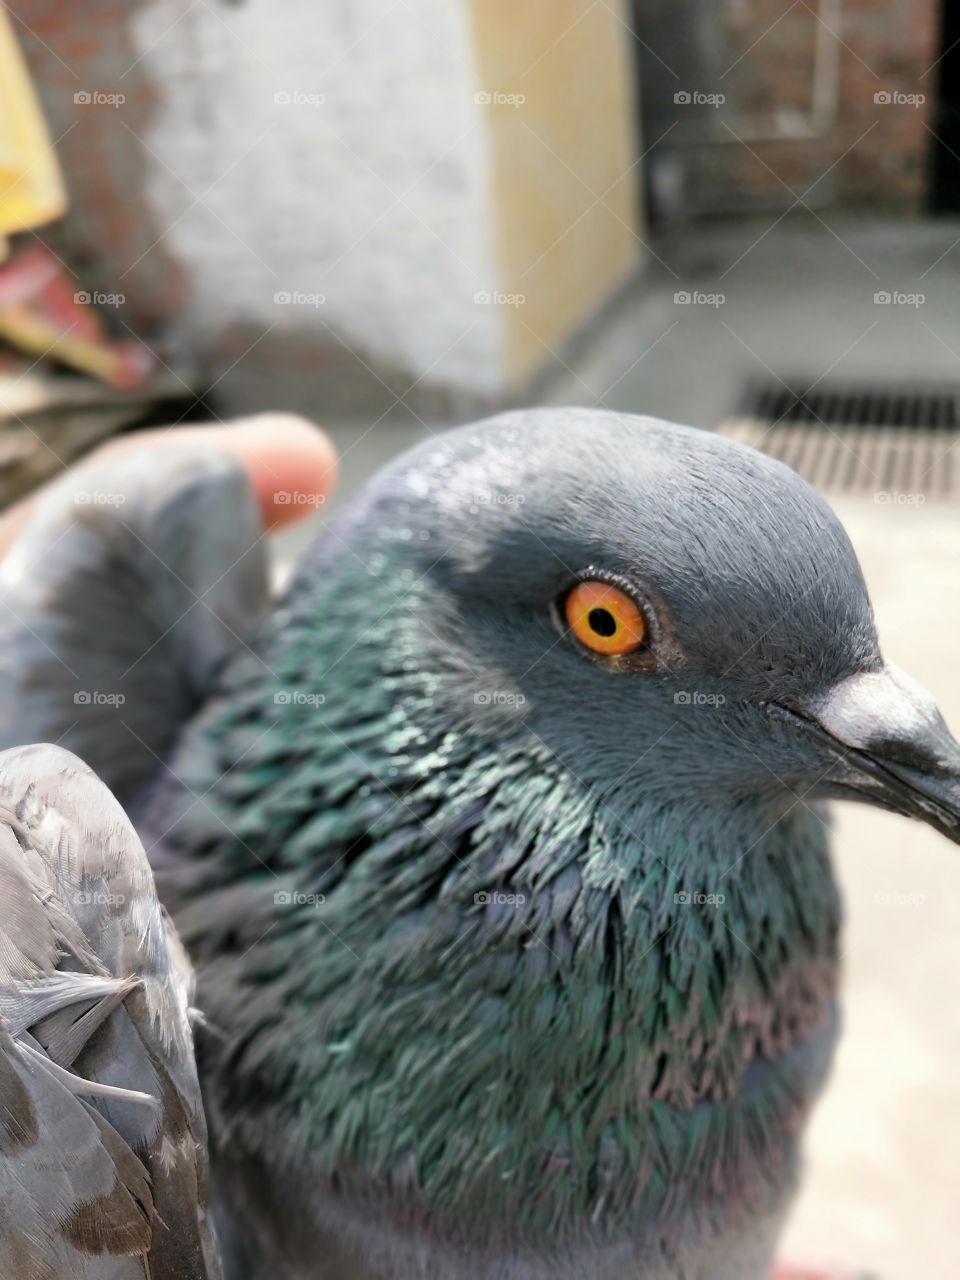 pigeon eye🐦🐦🐦🐦🐼🦇🐓🦅🐔